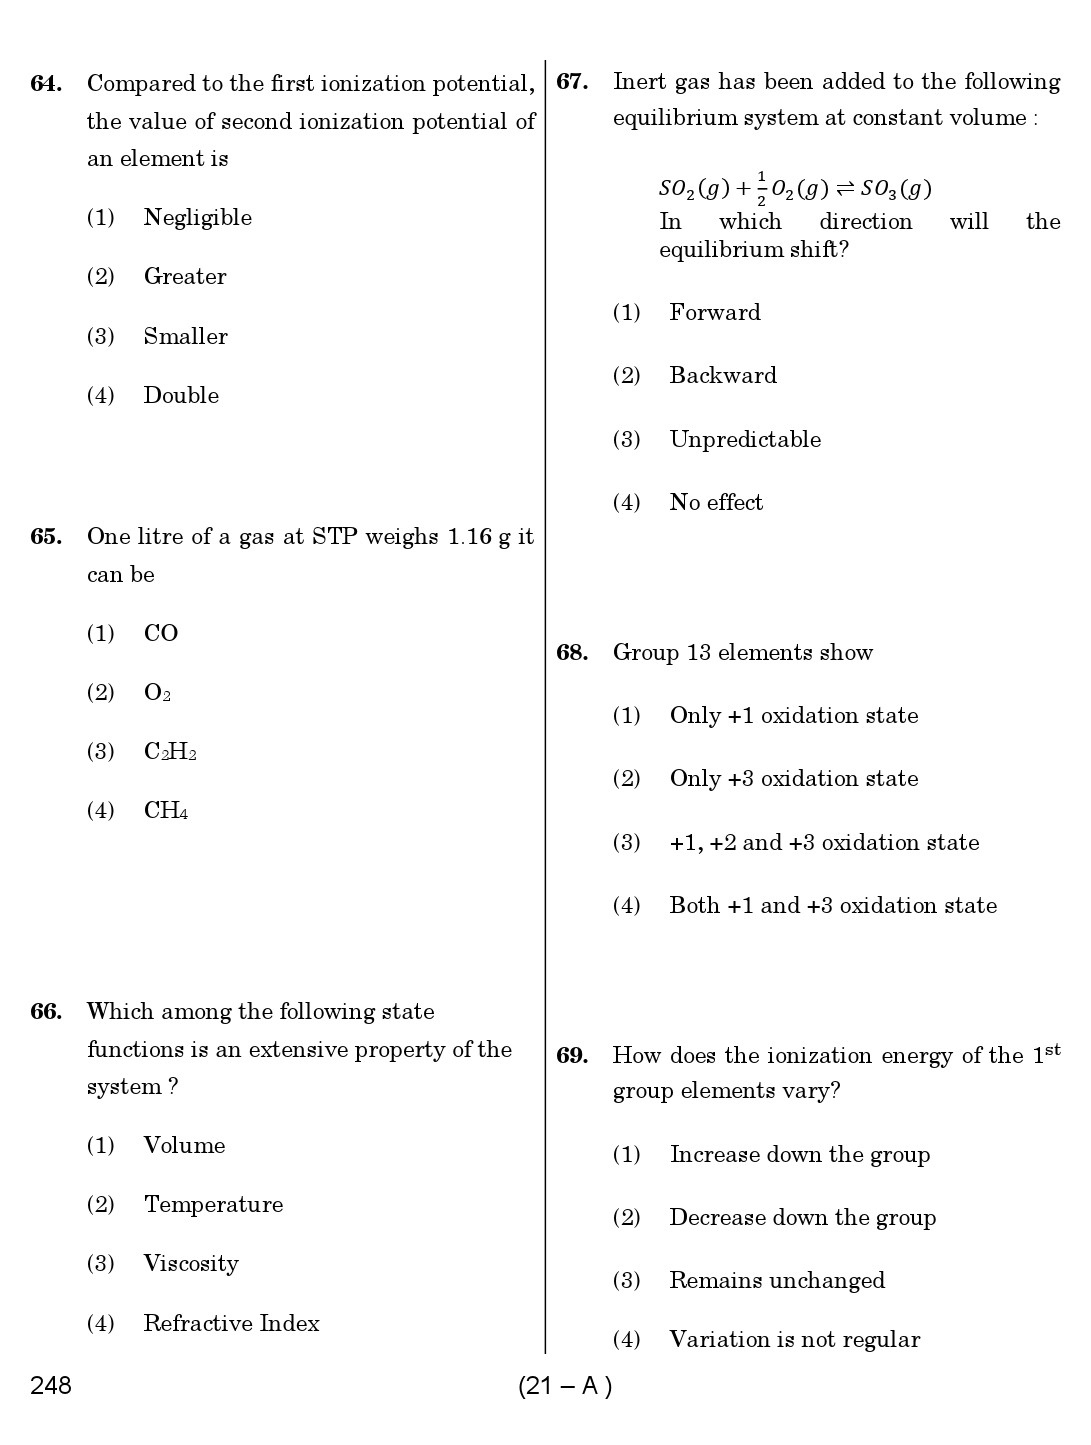 Karnataka PSC Laboratory Assistant Exam Sample Question Paper 21